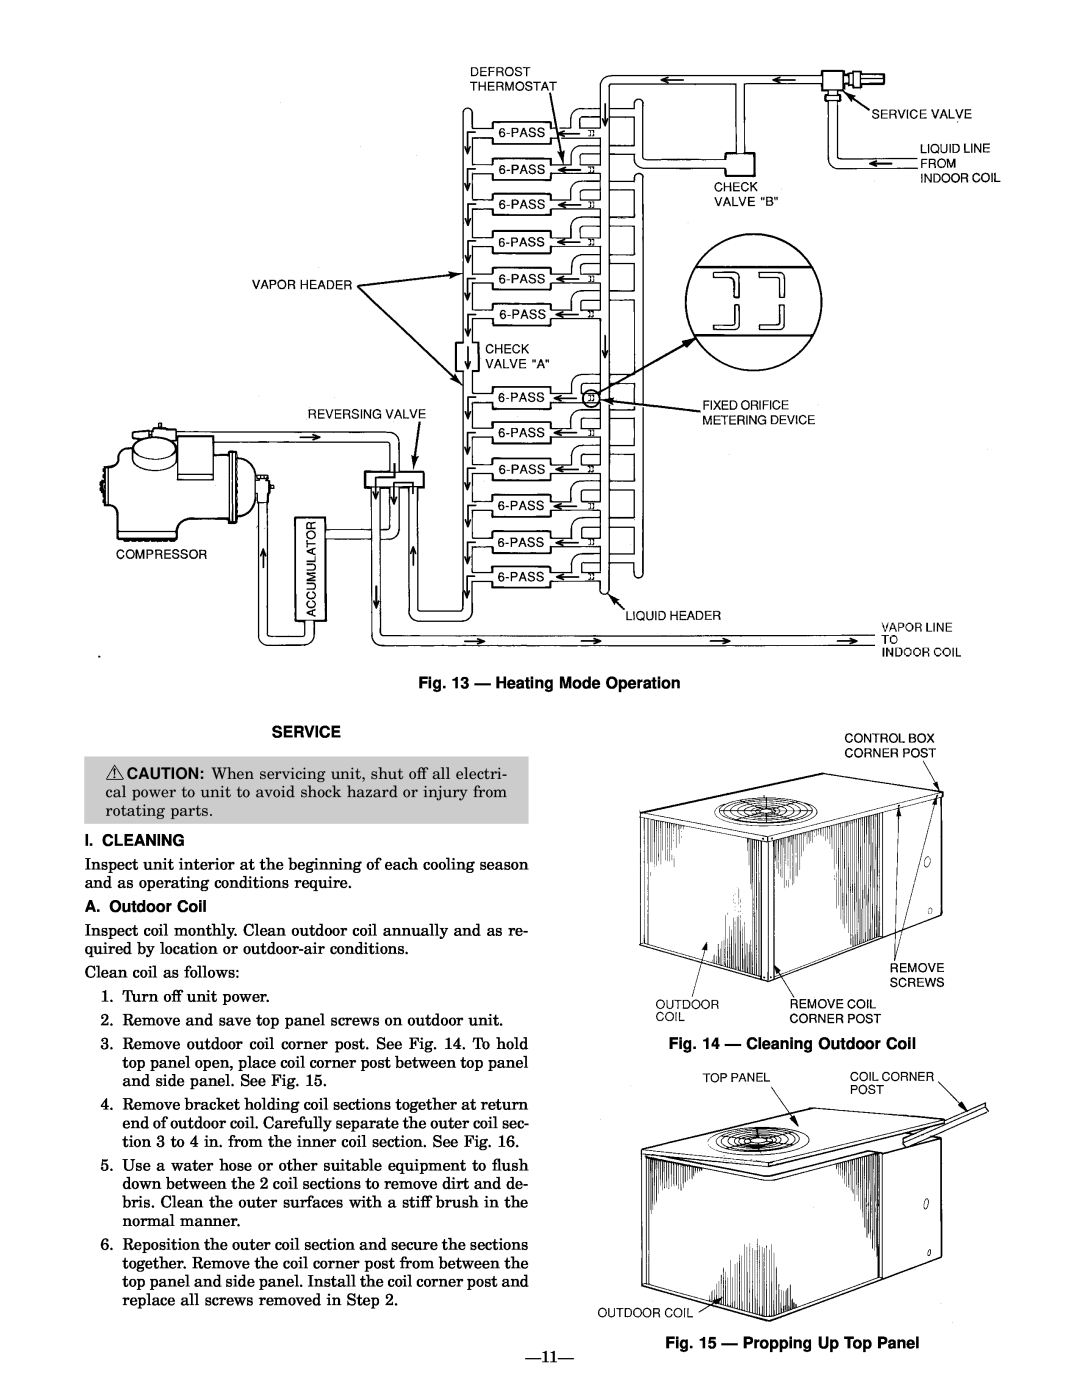 Bryant 575A Ð Heating Mode Operation SERVICE, I. Cleaning, A. Outdoor Coil, Ð Cleaning Outdoor Coil 